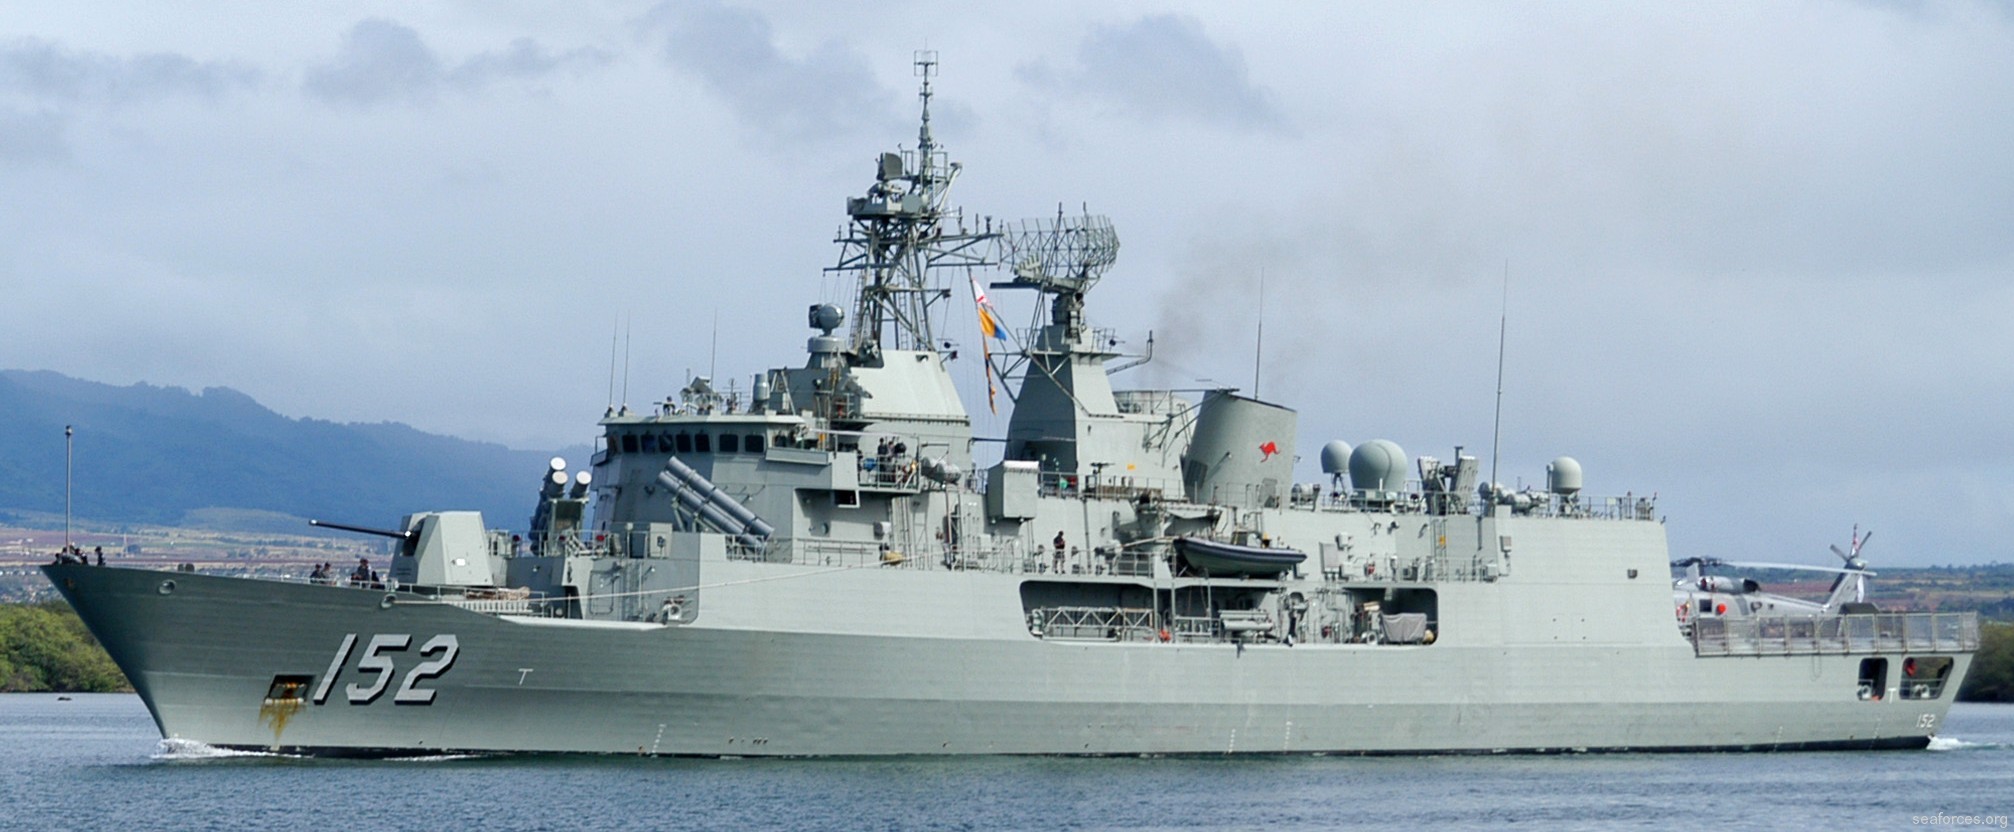 ffh-152 hmas warramunga anzac class frigate royal australian navy 2010 09